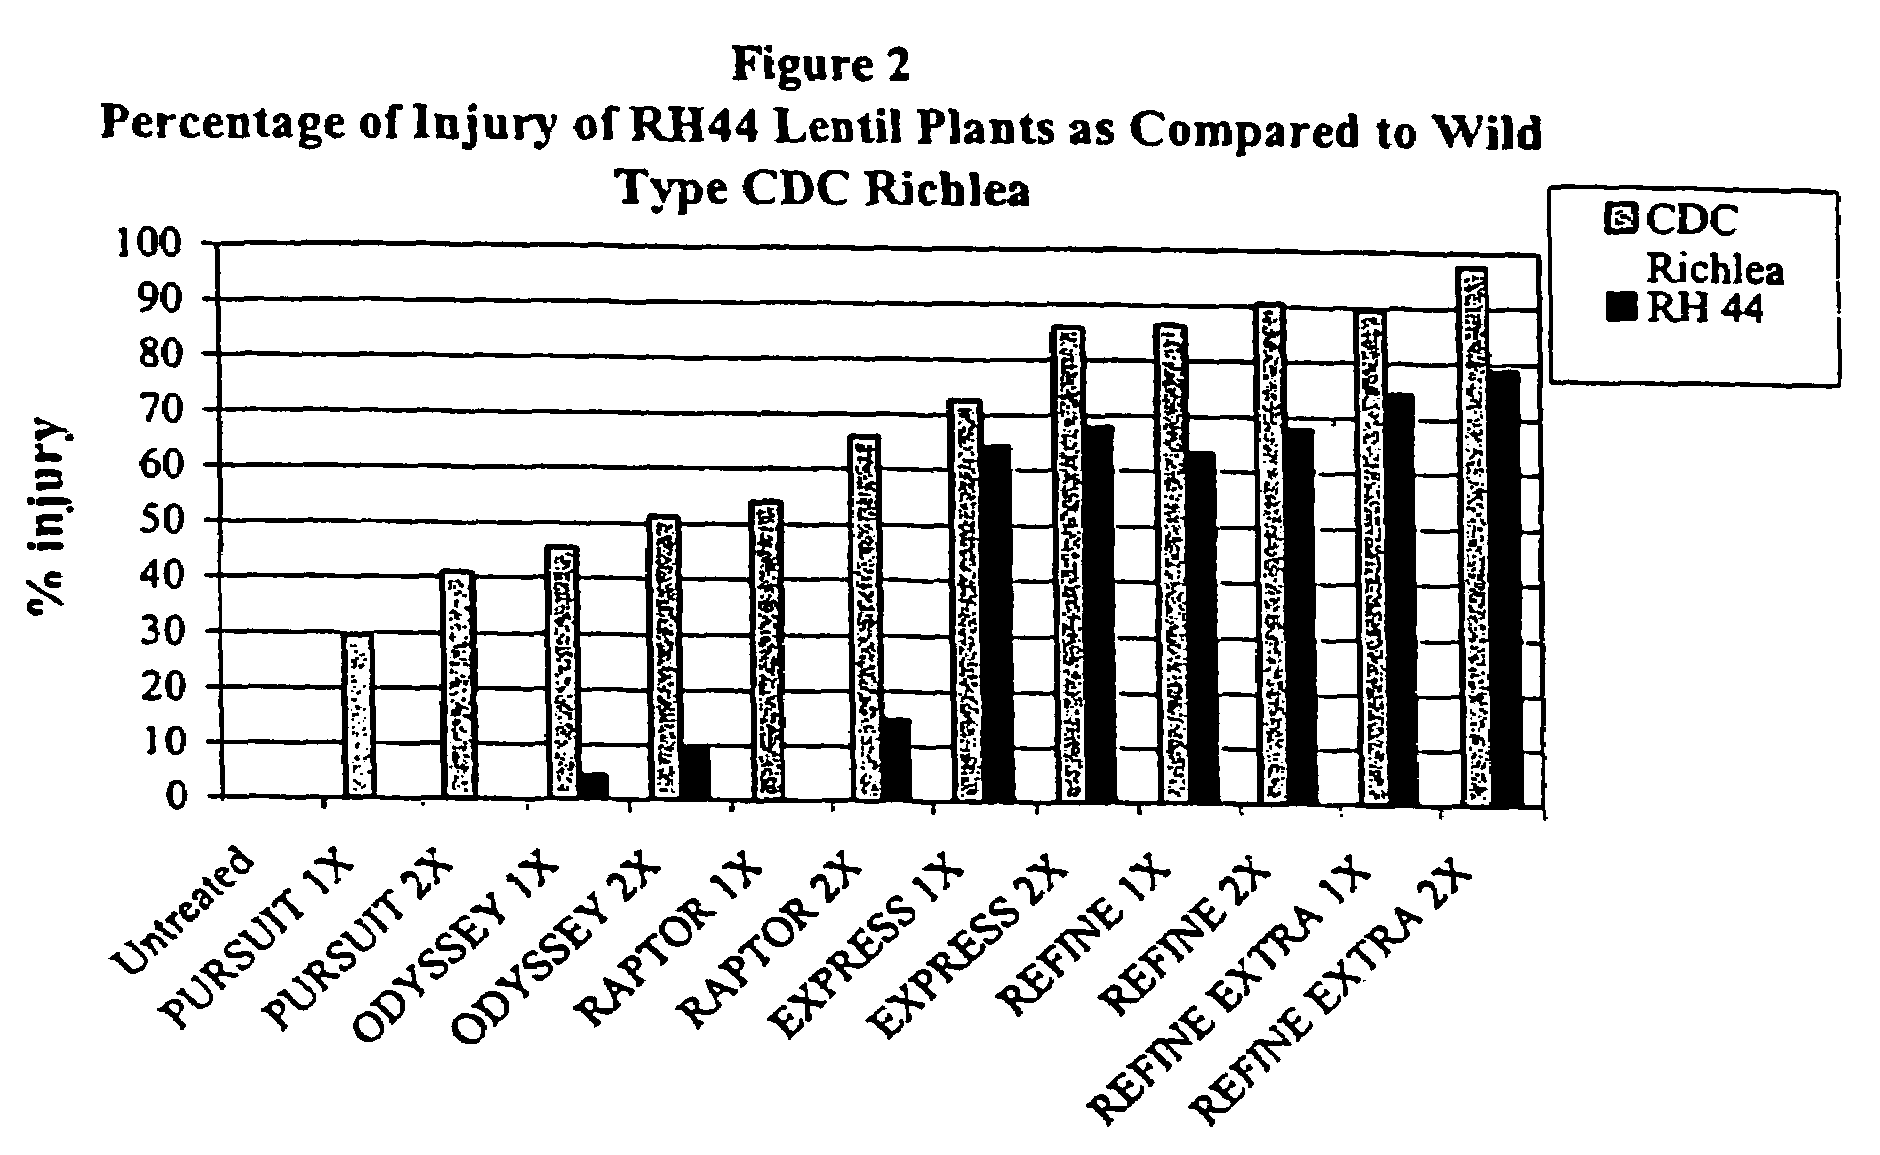 Lentil plants having increased resistance to imidazolinone herbicides